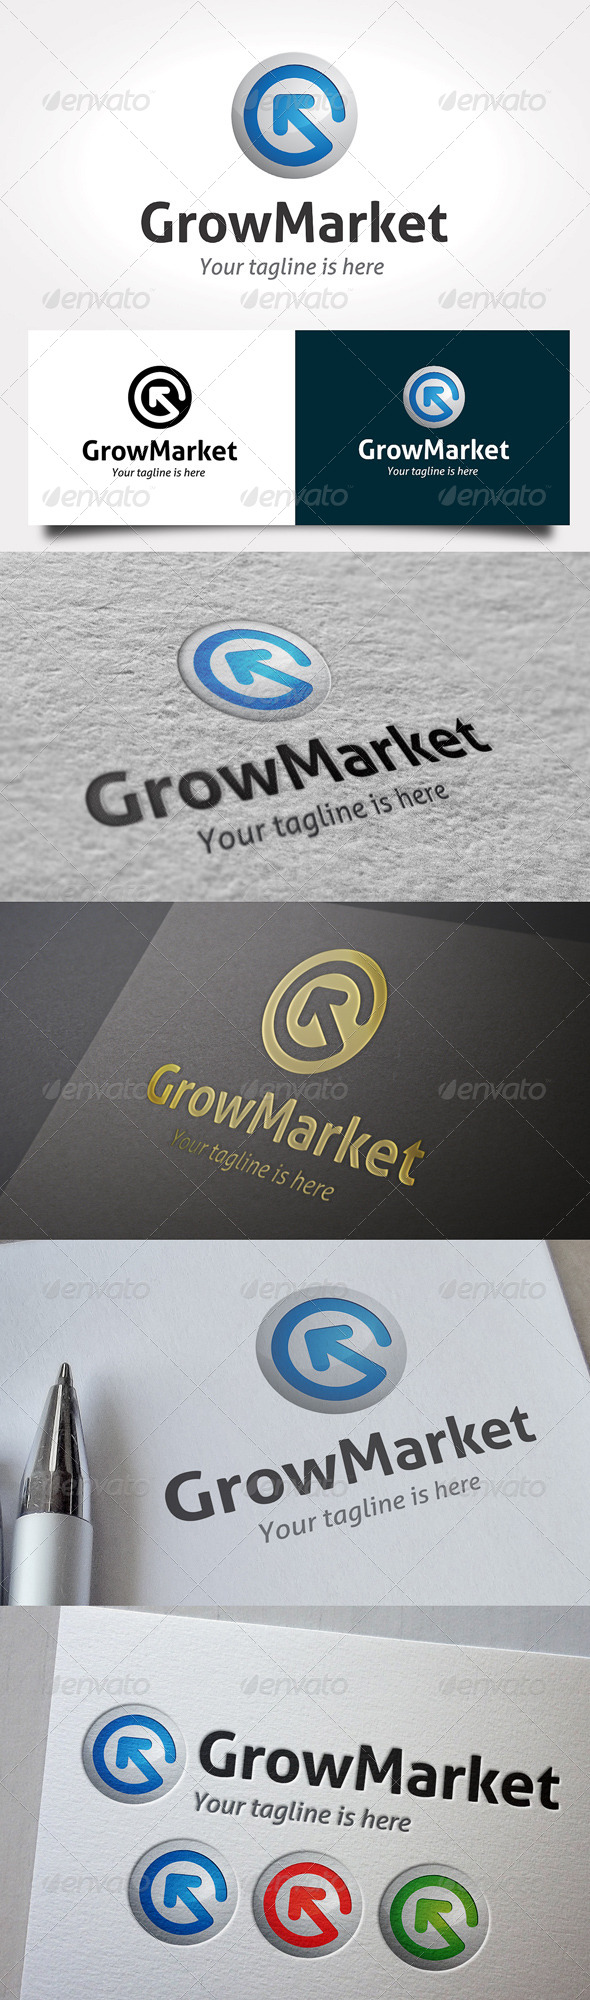 Grow Market Logo